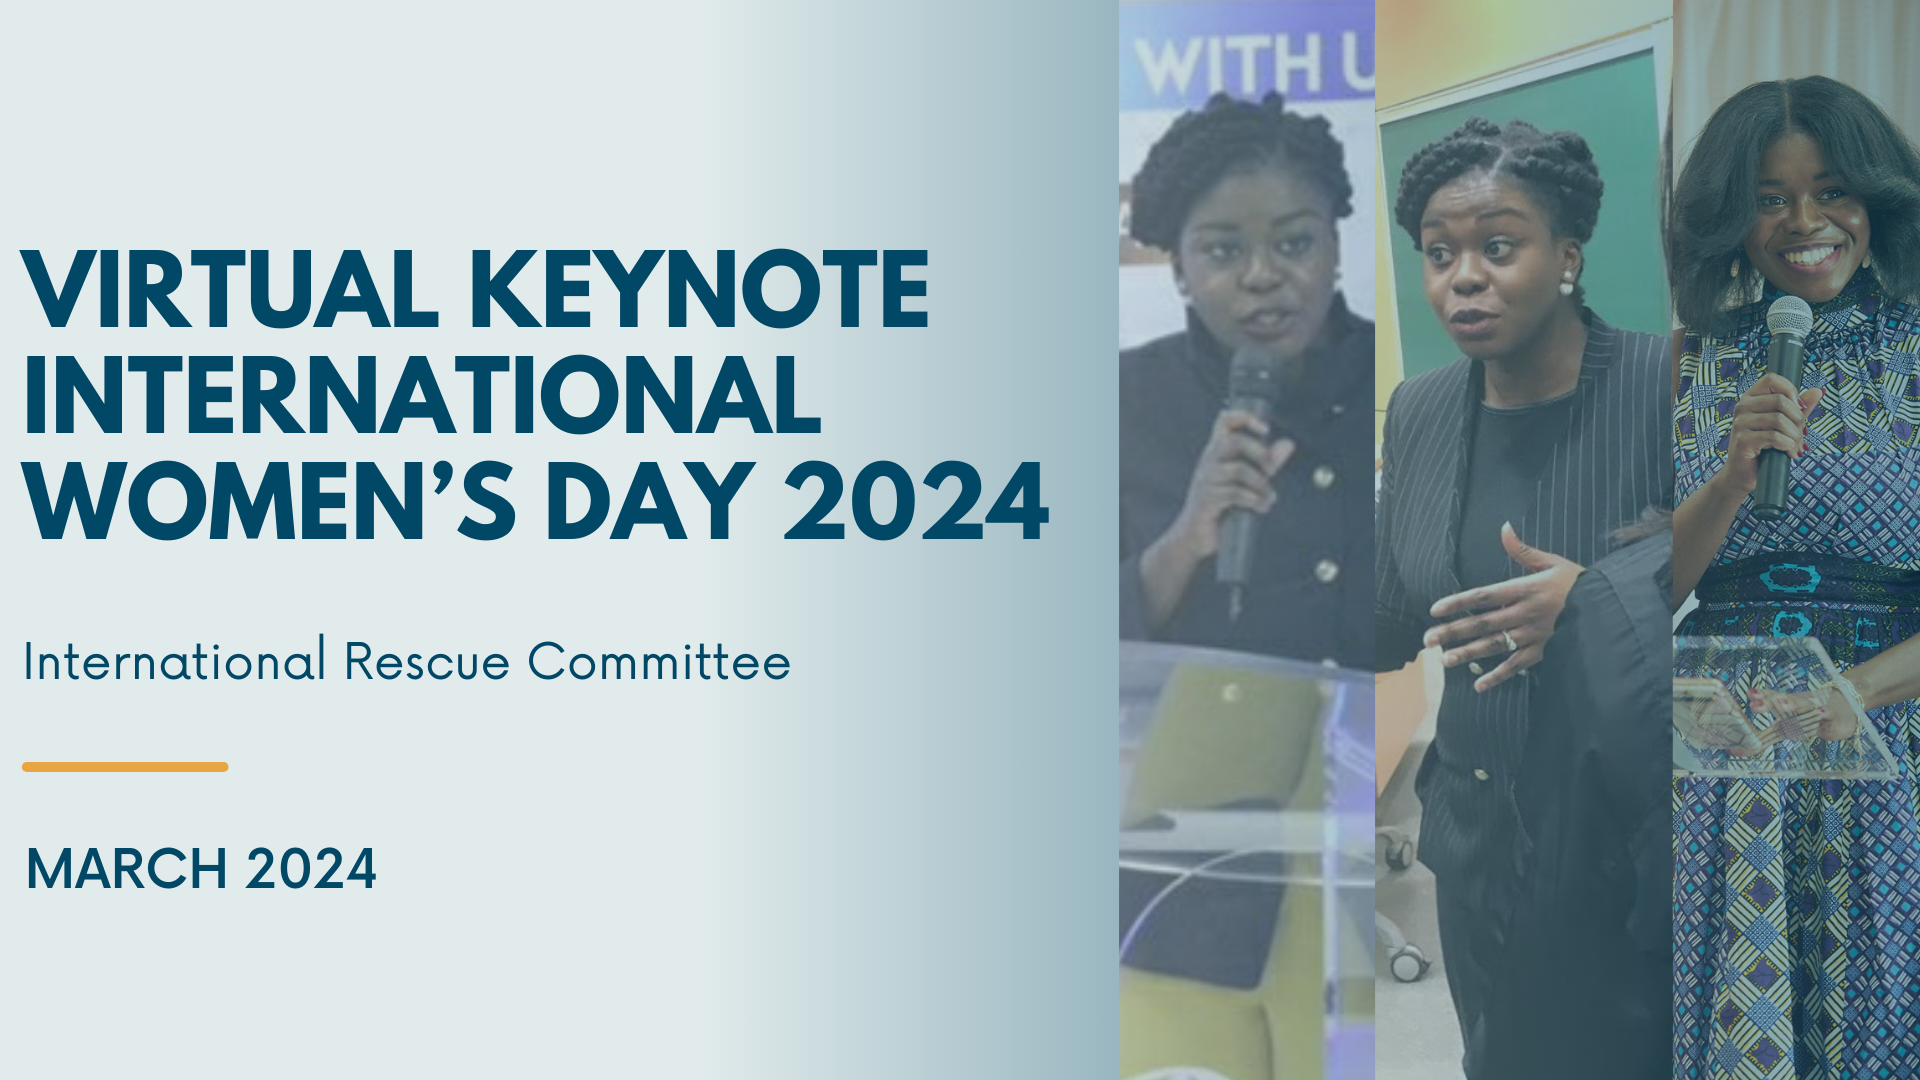 VIRTUAL KEYNOTE SPEECH: INTERNATIONAL WOMEN'S DAY 2024